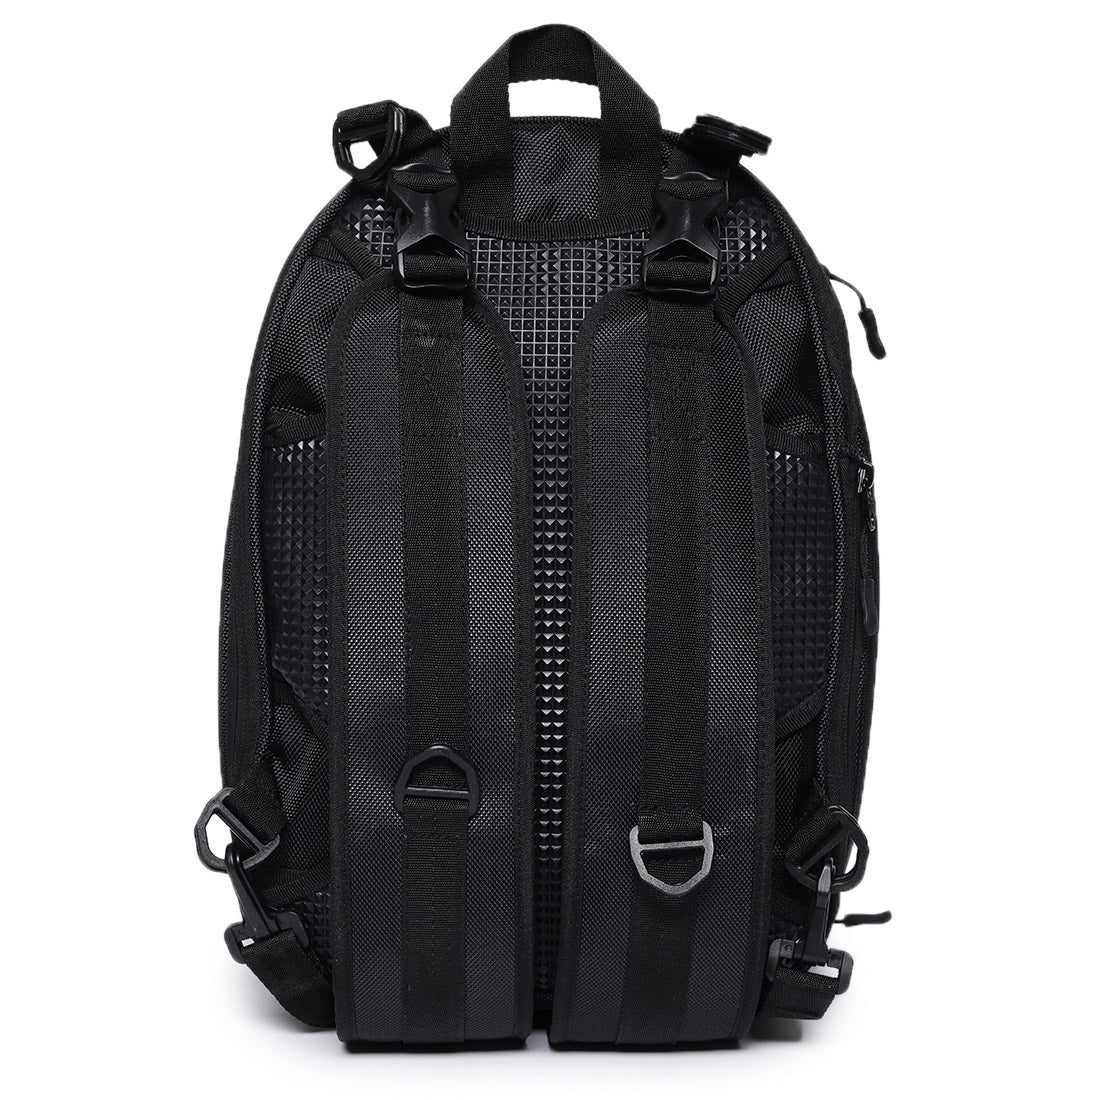  TVS Racing Tank Bag for Bike Riding - Convertible Backpack, Magnetic, Glove Storage with Mobile Pocket - Versatile Tank Bag for Bike - Durable, Spacious, Semi-Rigid Design